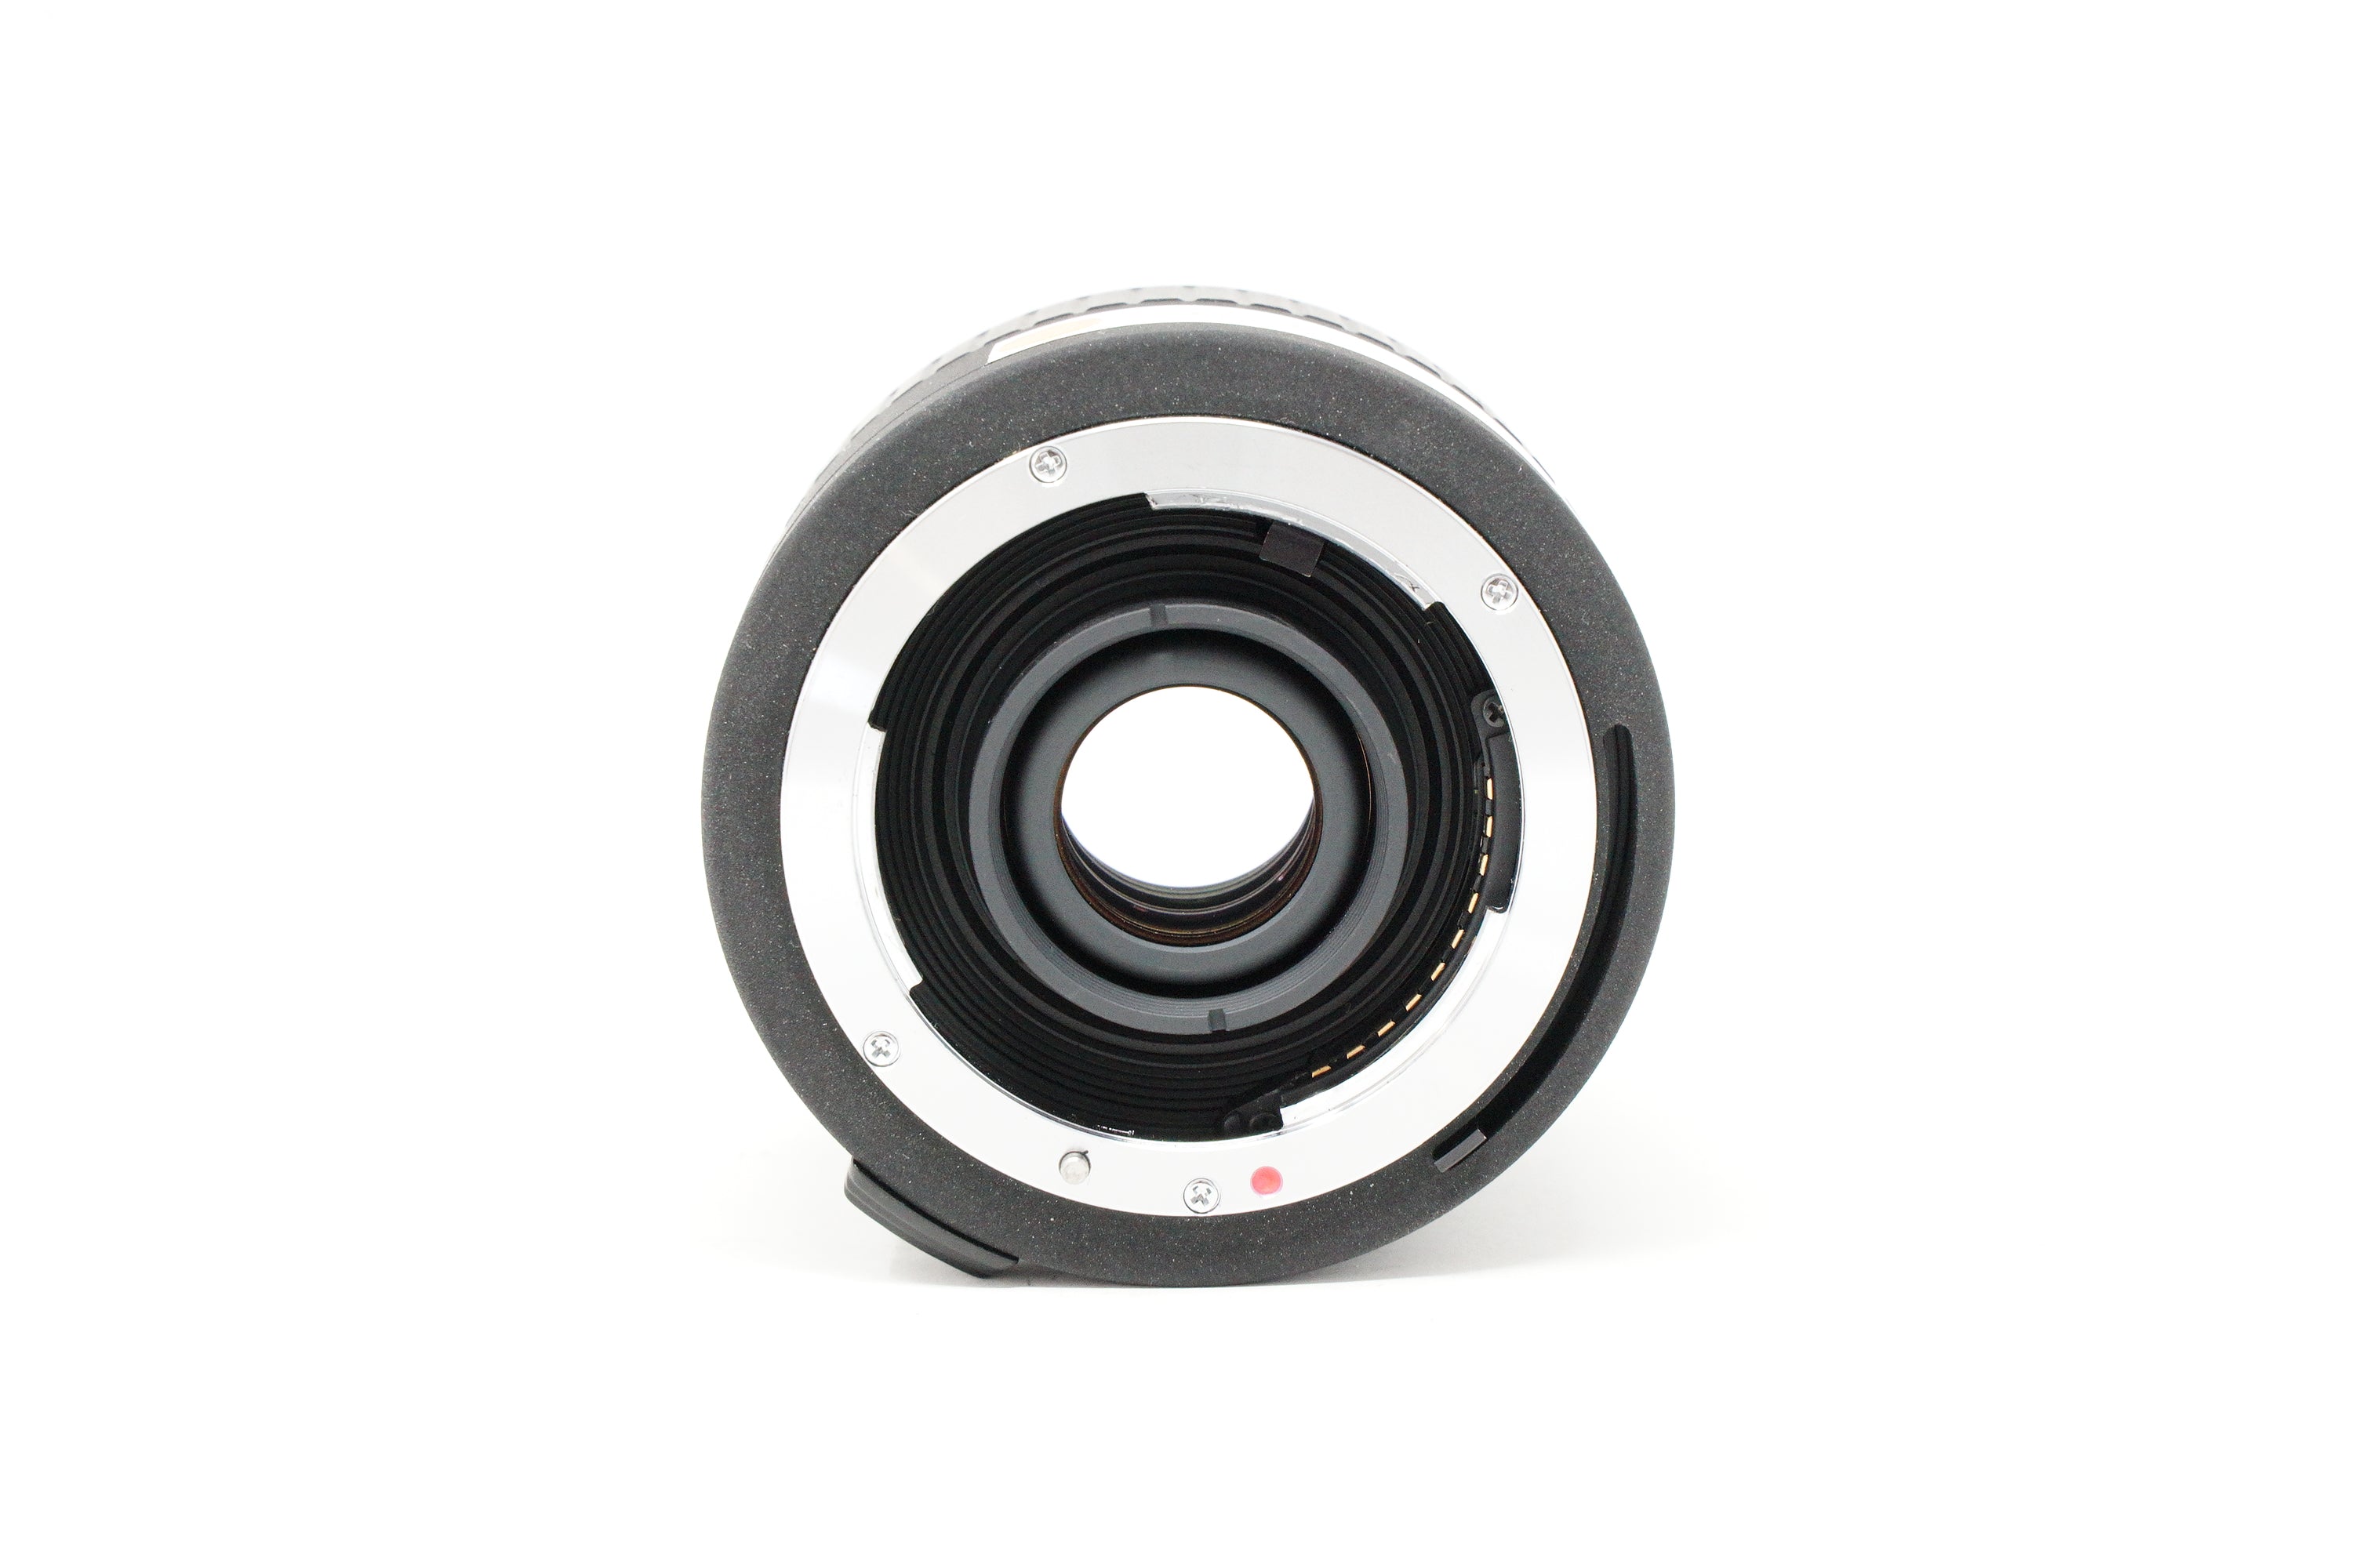 Used Sigma APO Teleconverter 2X EX DG in Nikon fit (case SH38750)